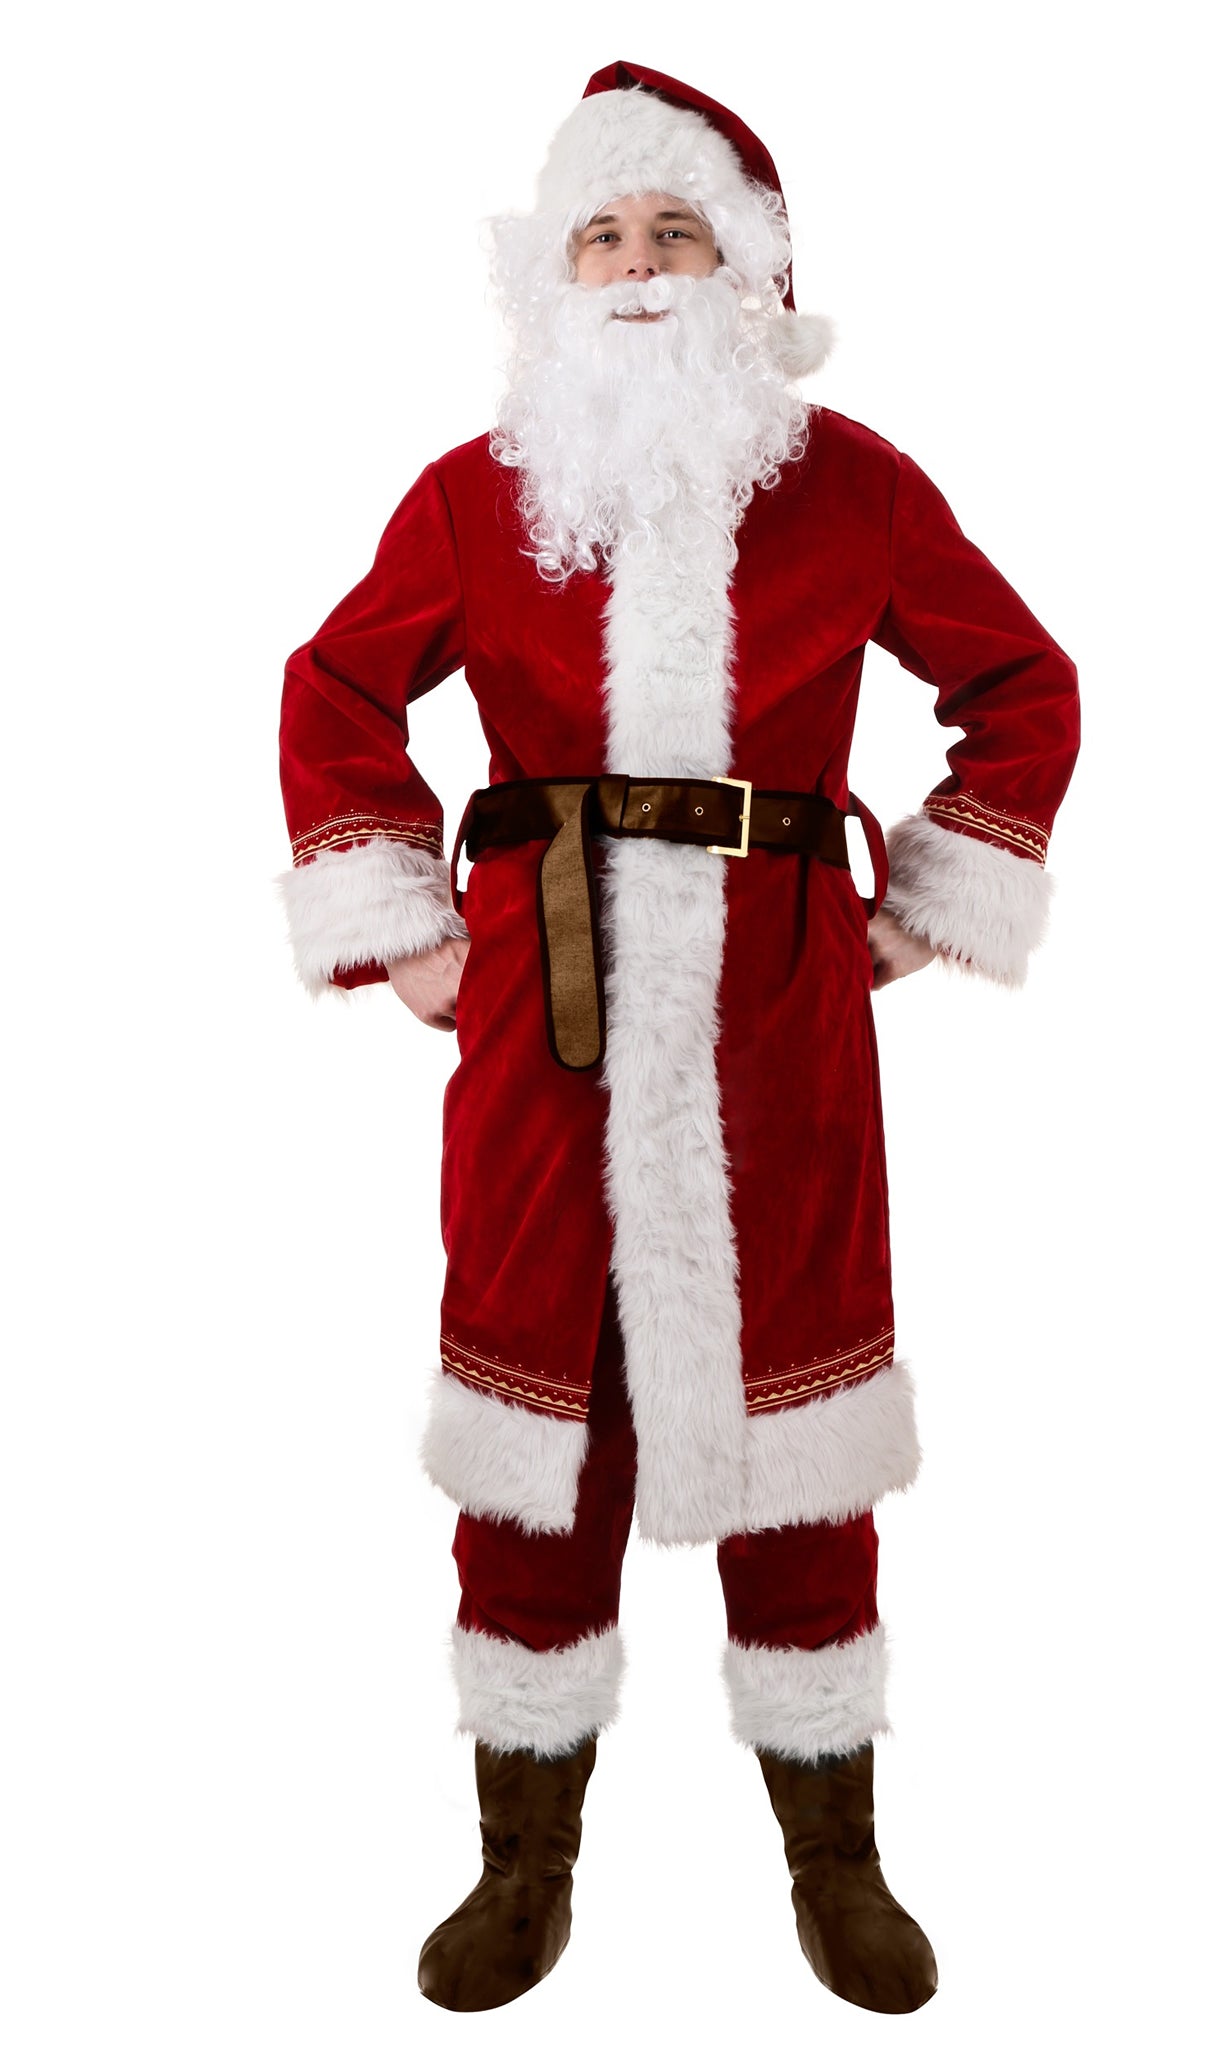 Polar express Santa costume with wig and beard